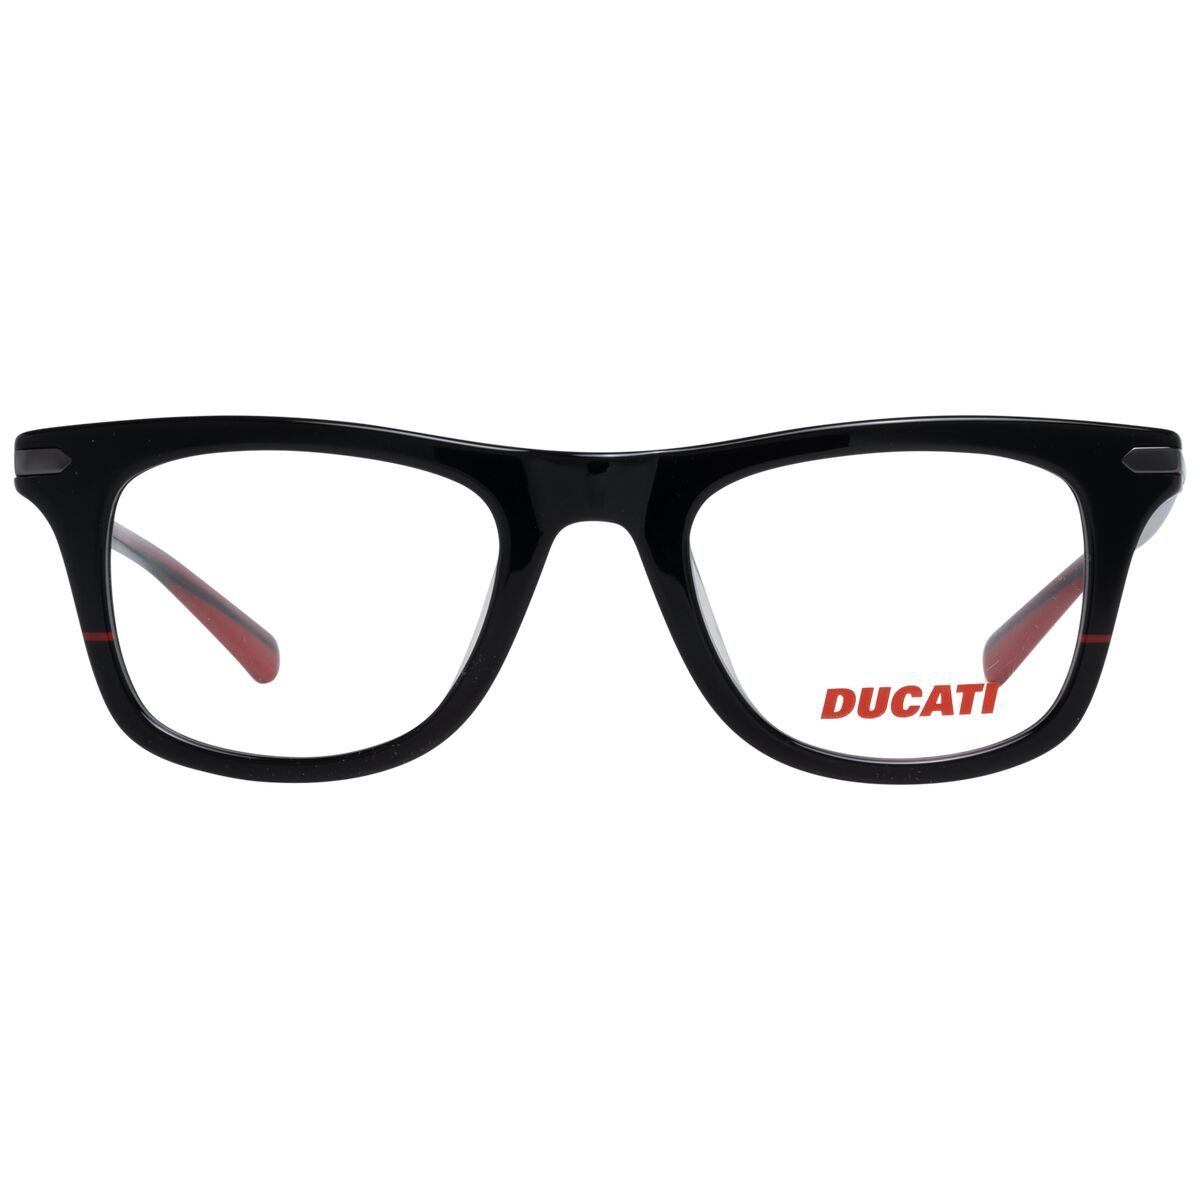 Kaufe Brillenfassung Ducati DA1008 50001 bei AWK Flagship um € 76.00